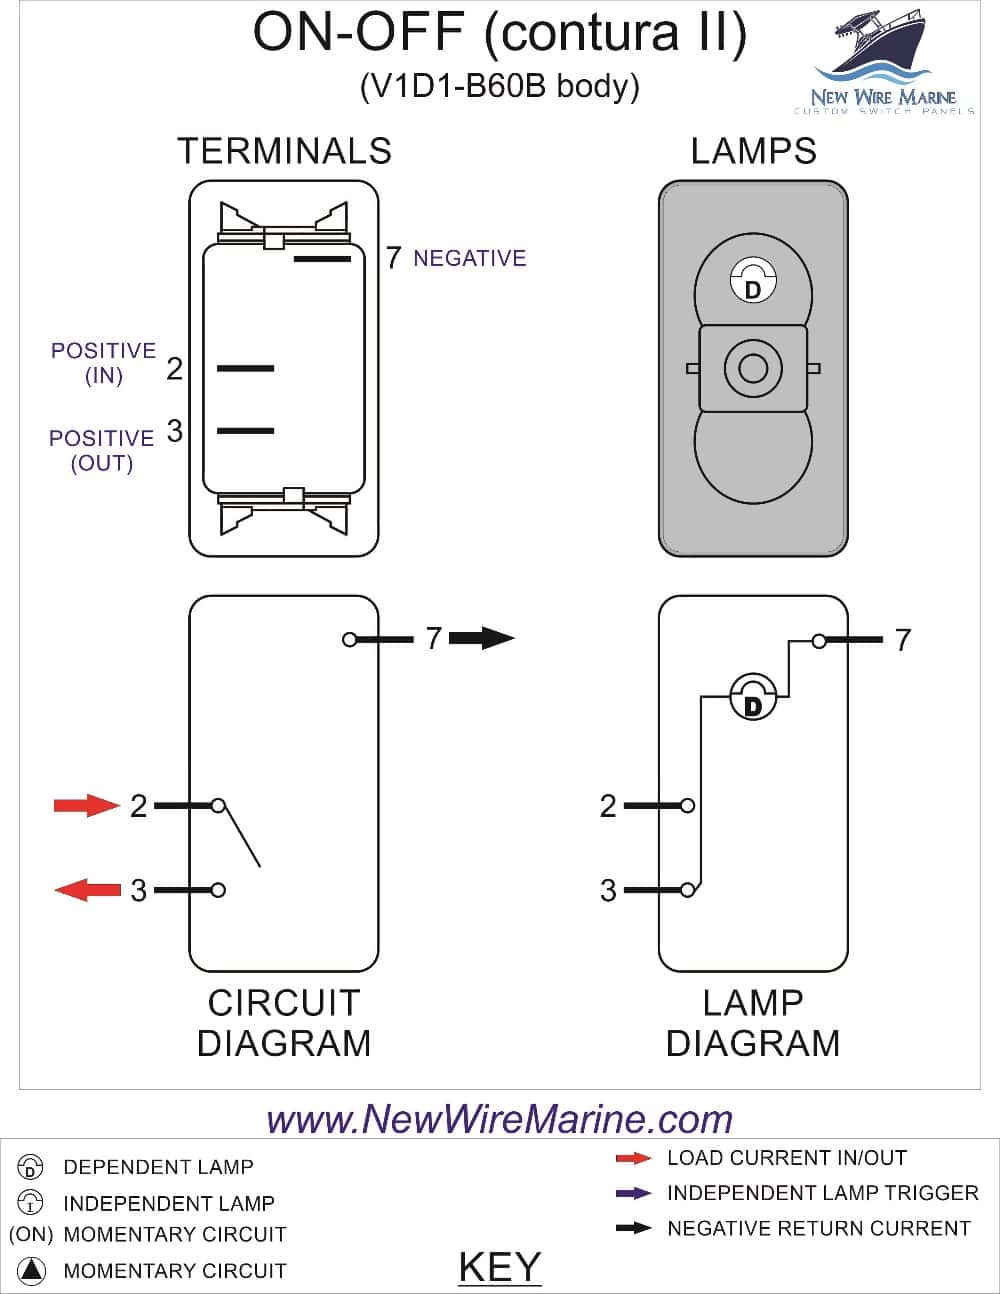 Rocker Switch Wiring Diagrams | New Wire Marine - Carling Switch Wiring Diagram